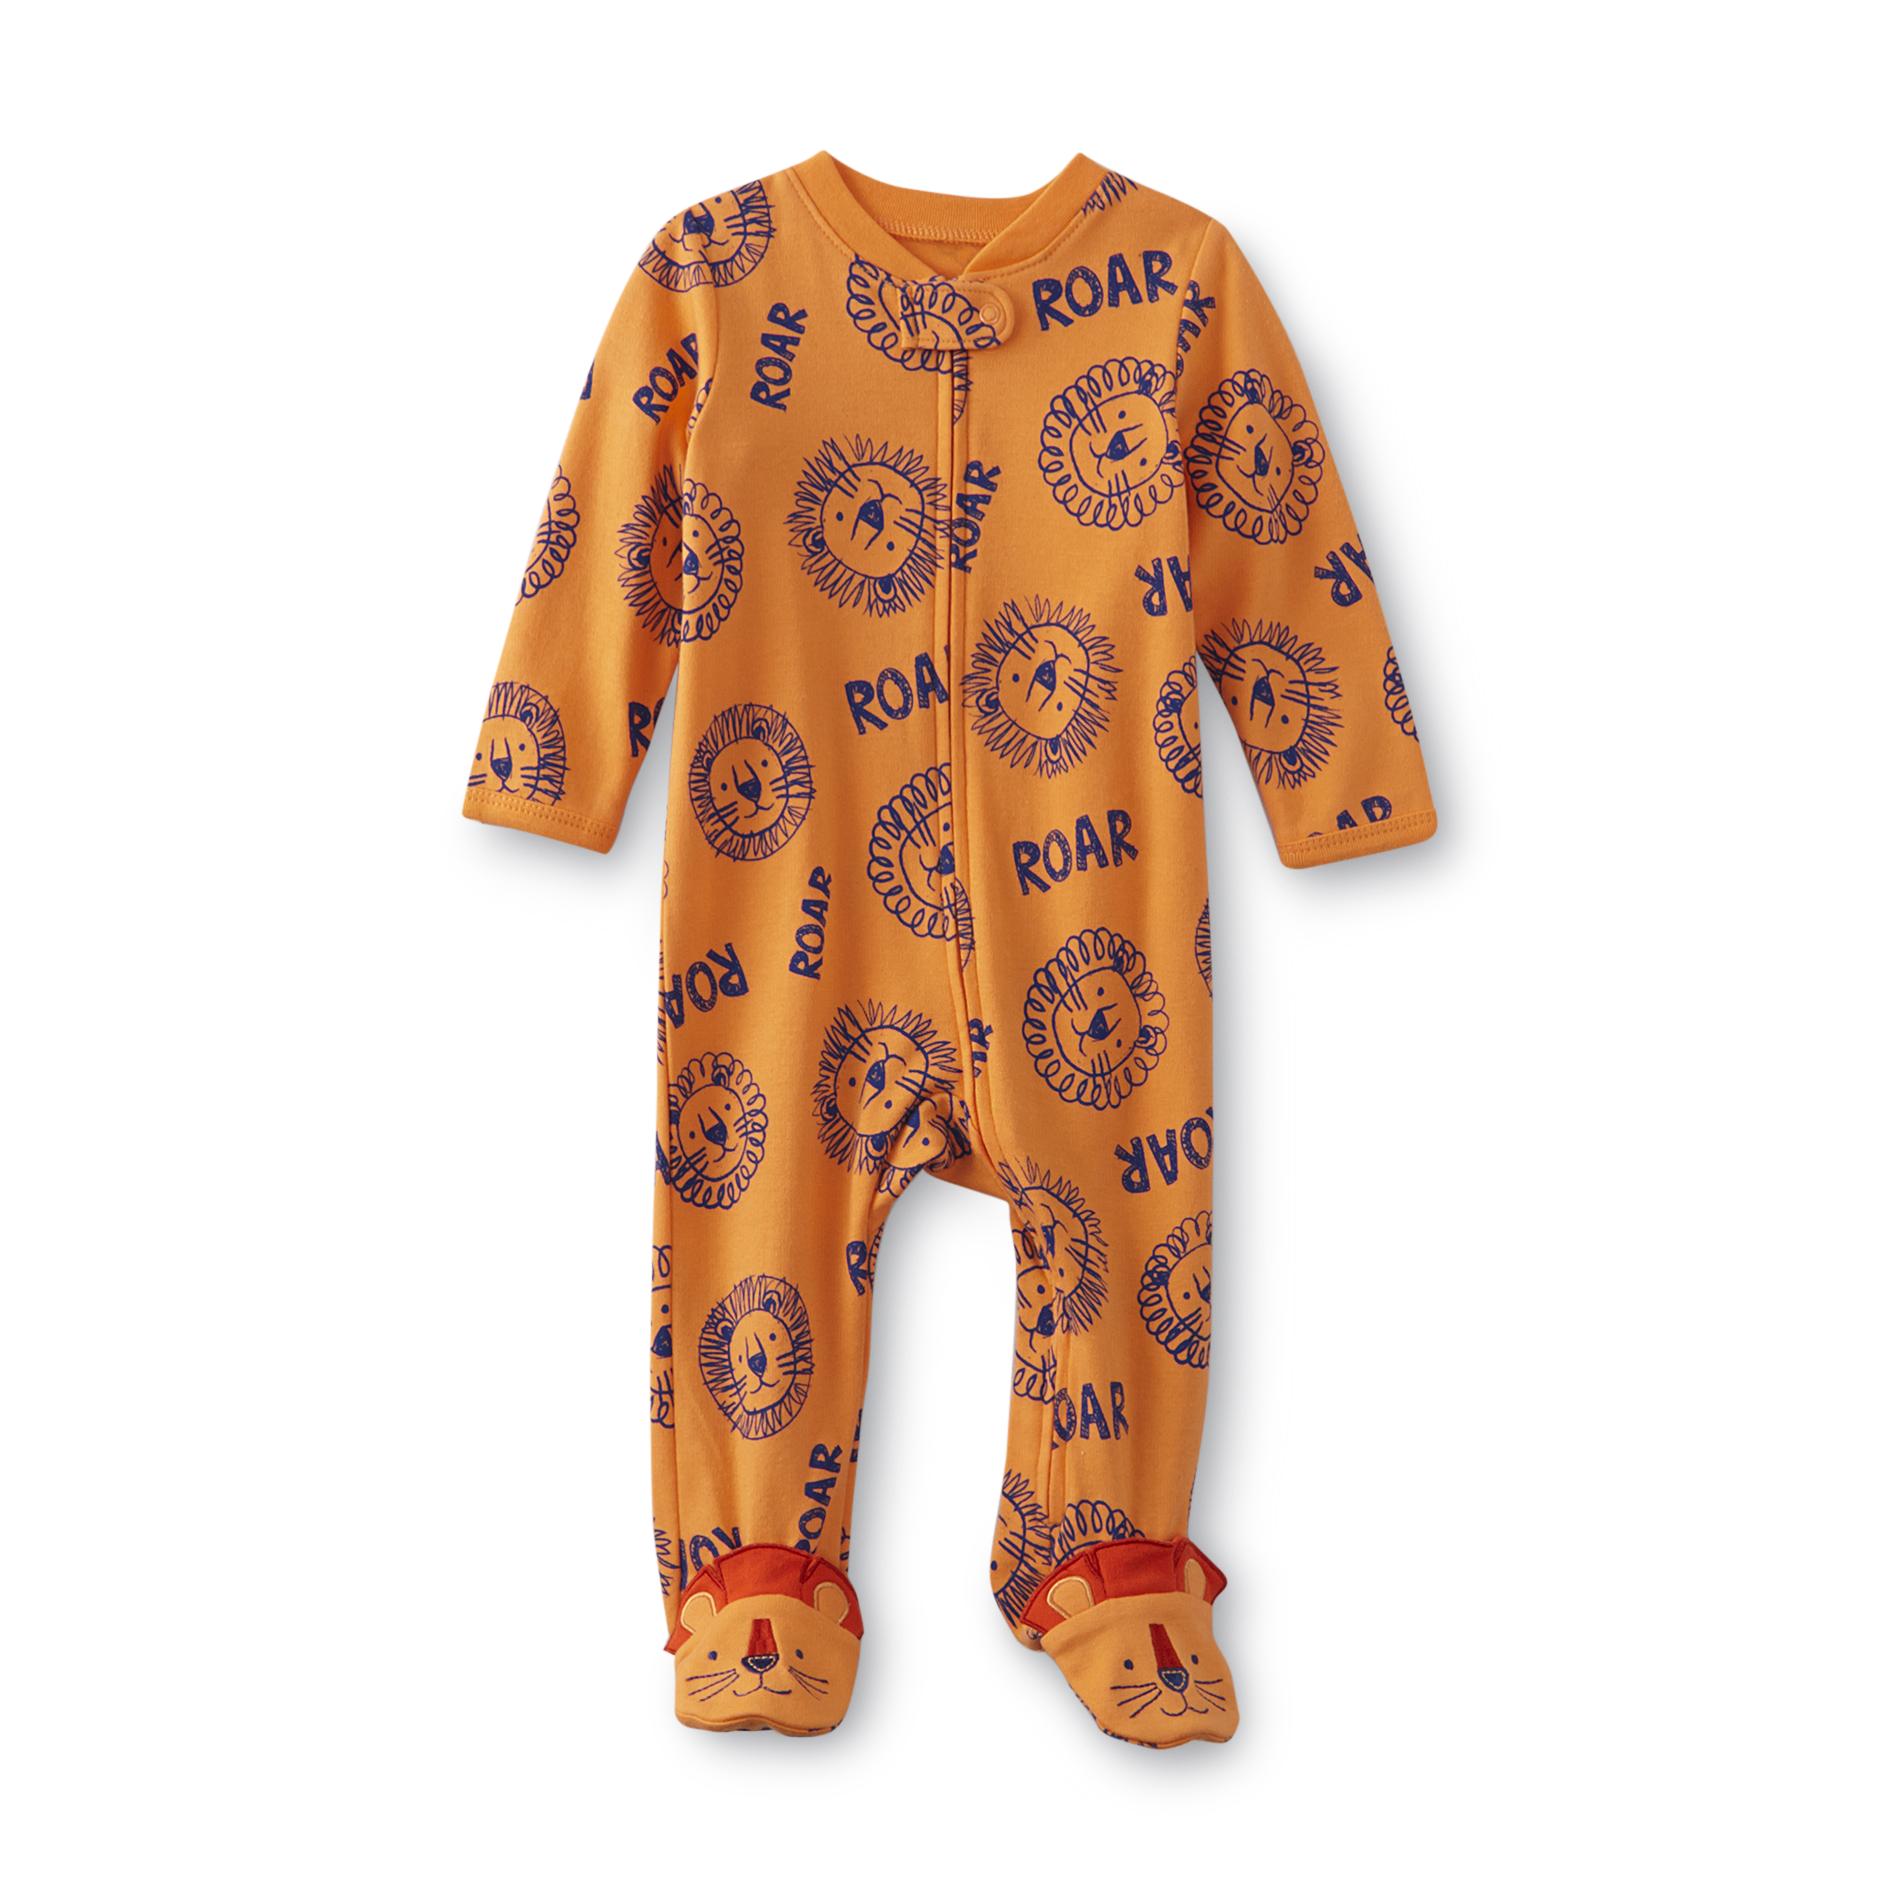 Newborn Boy's Sleeper Pajamas - Lion